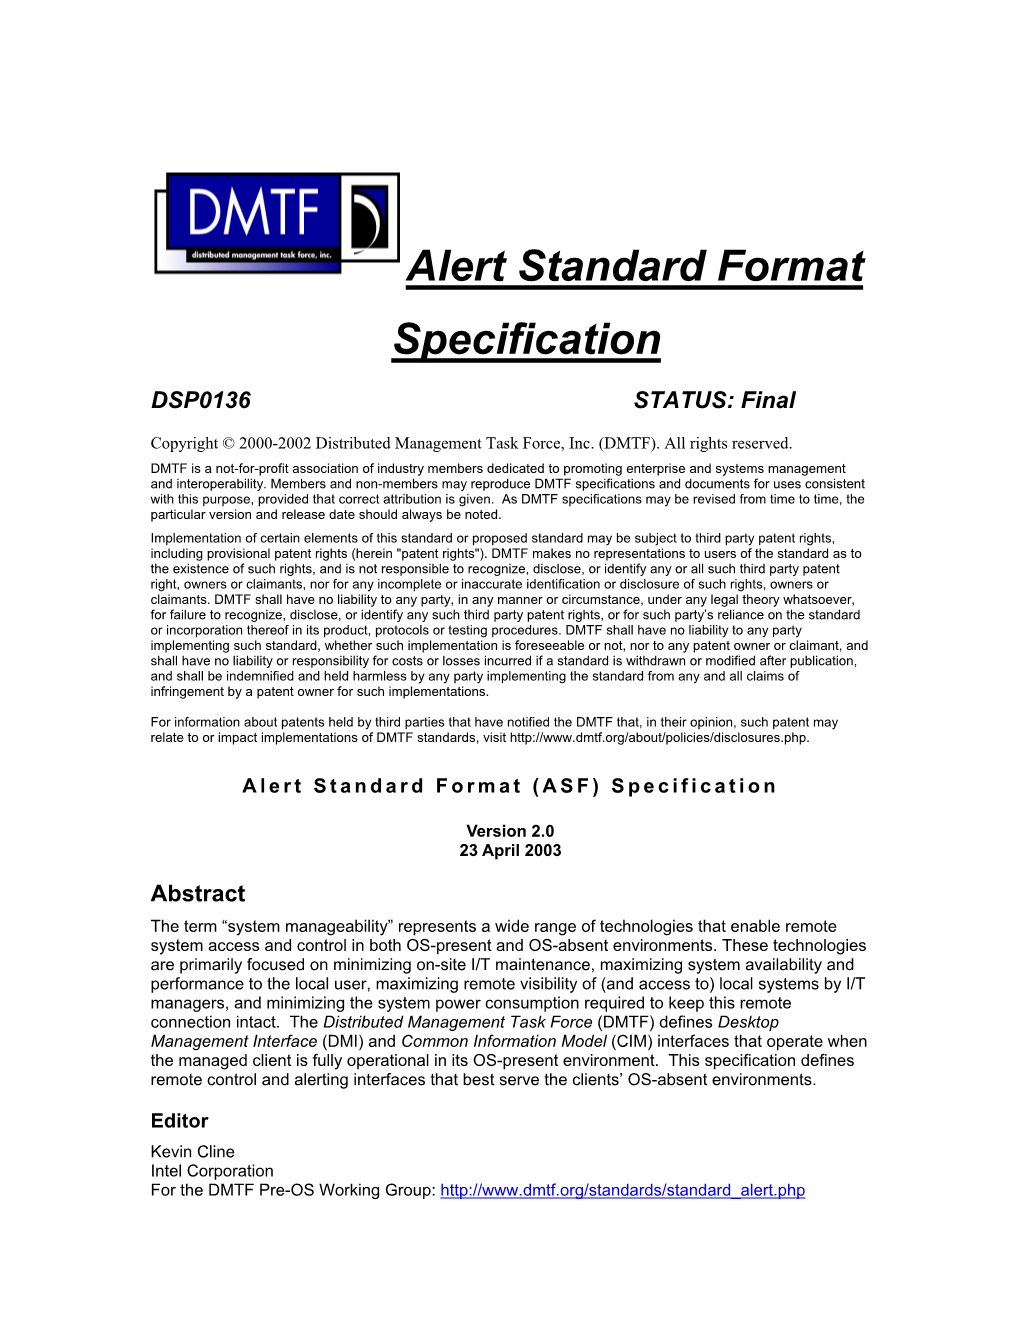 Alert Standard Format (ASF) Specification